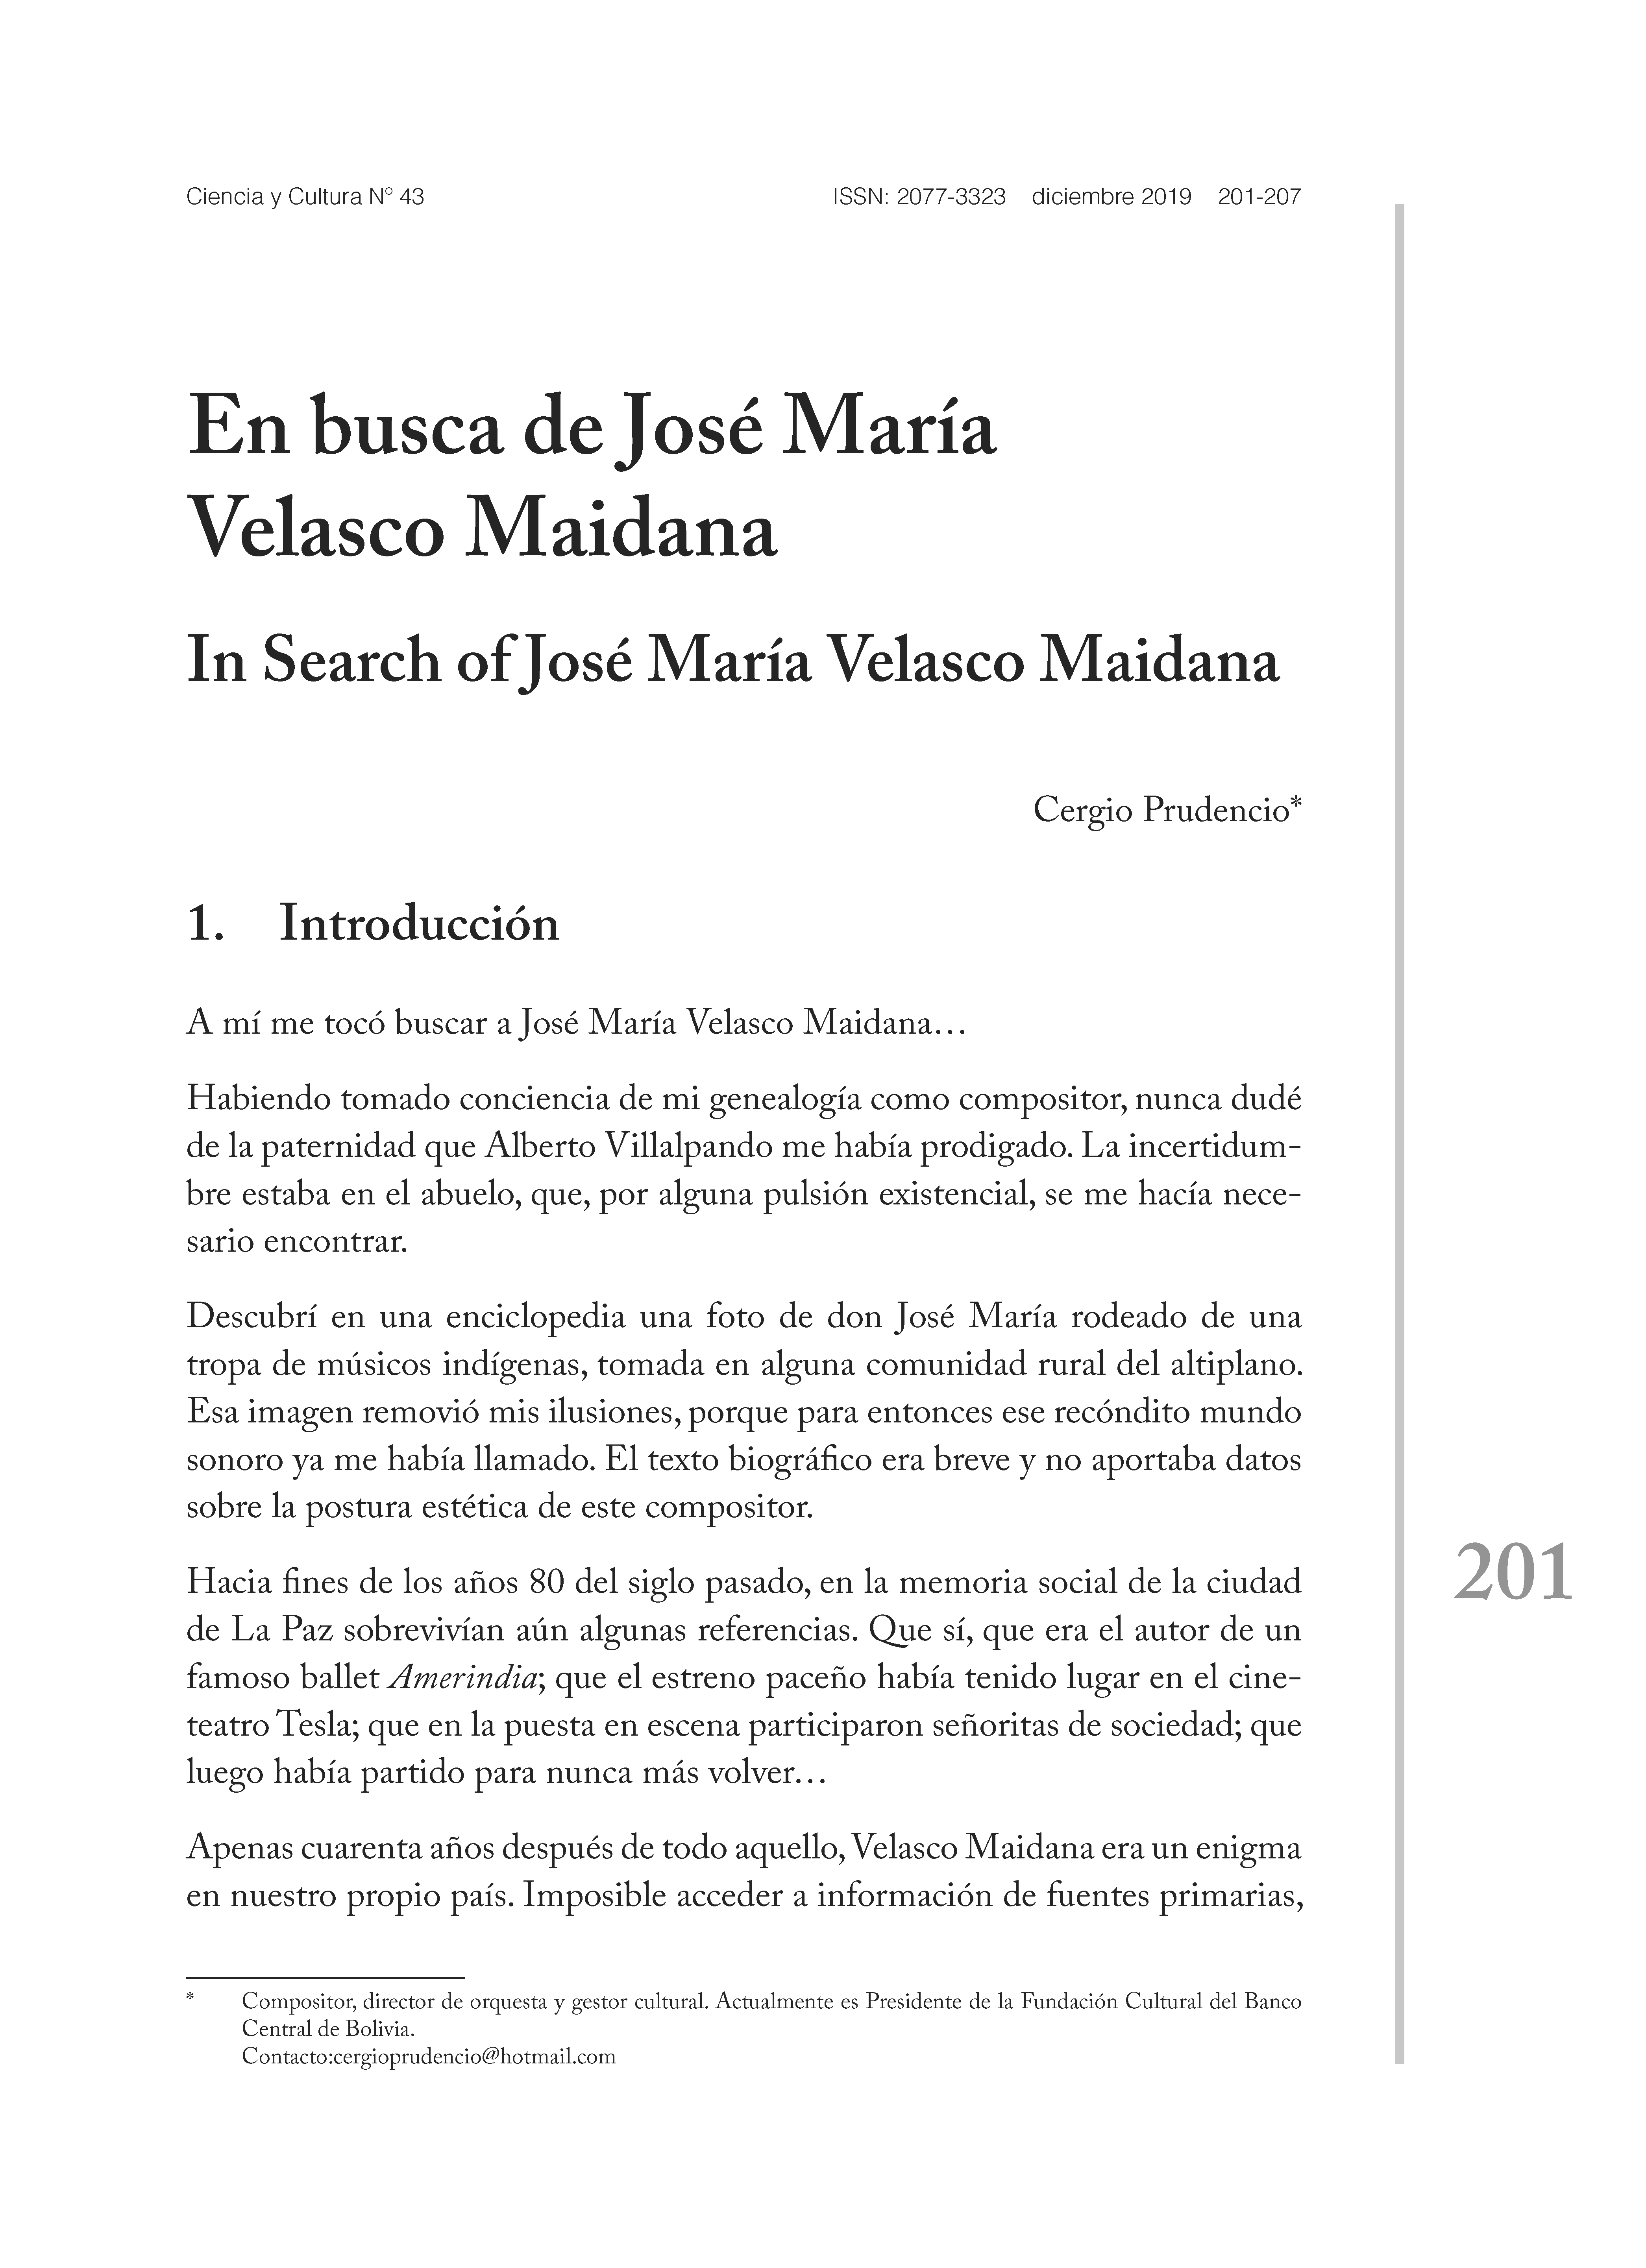 En busca de José María Velasco Maidana